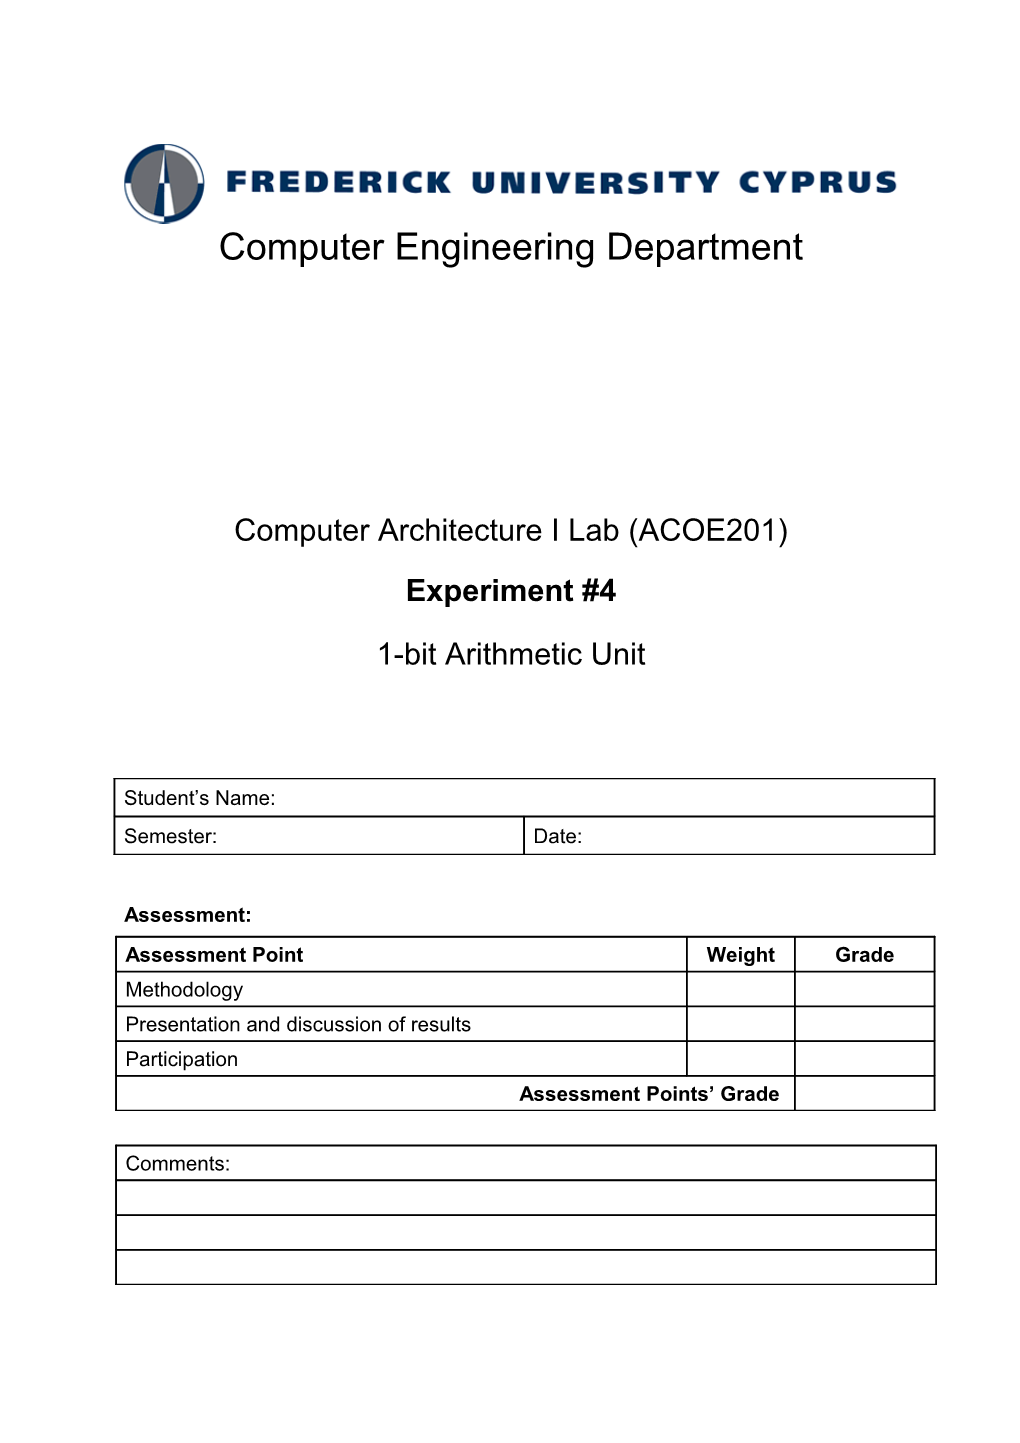 Computer Architecture Lab - ACOE201